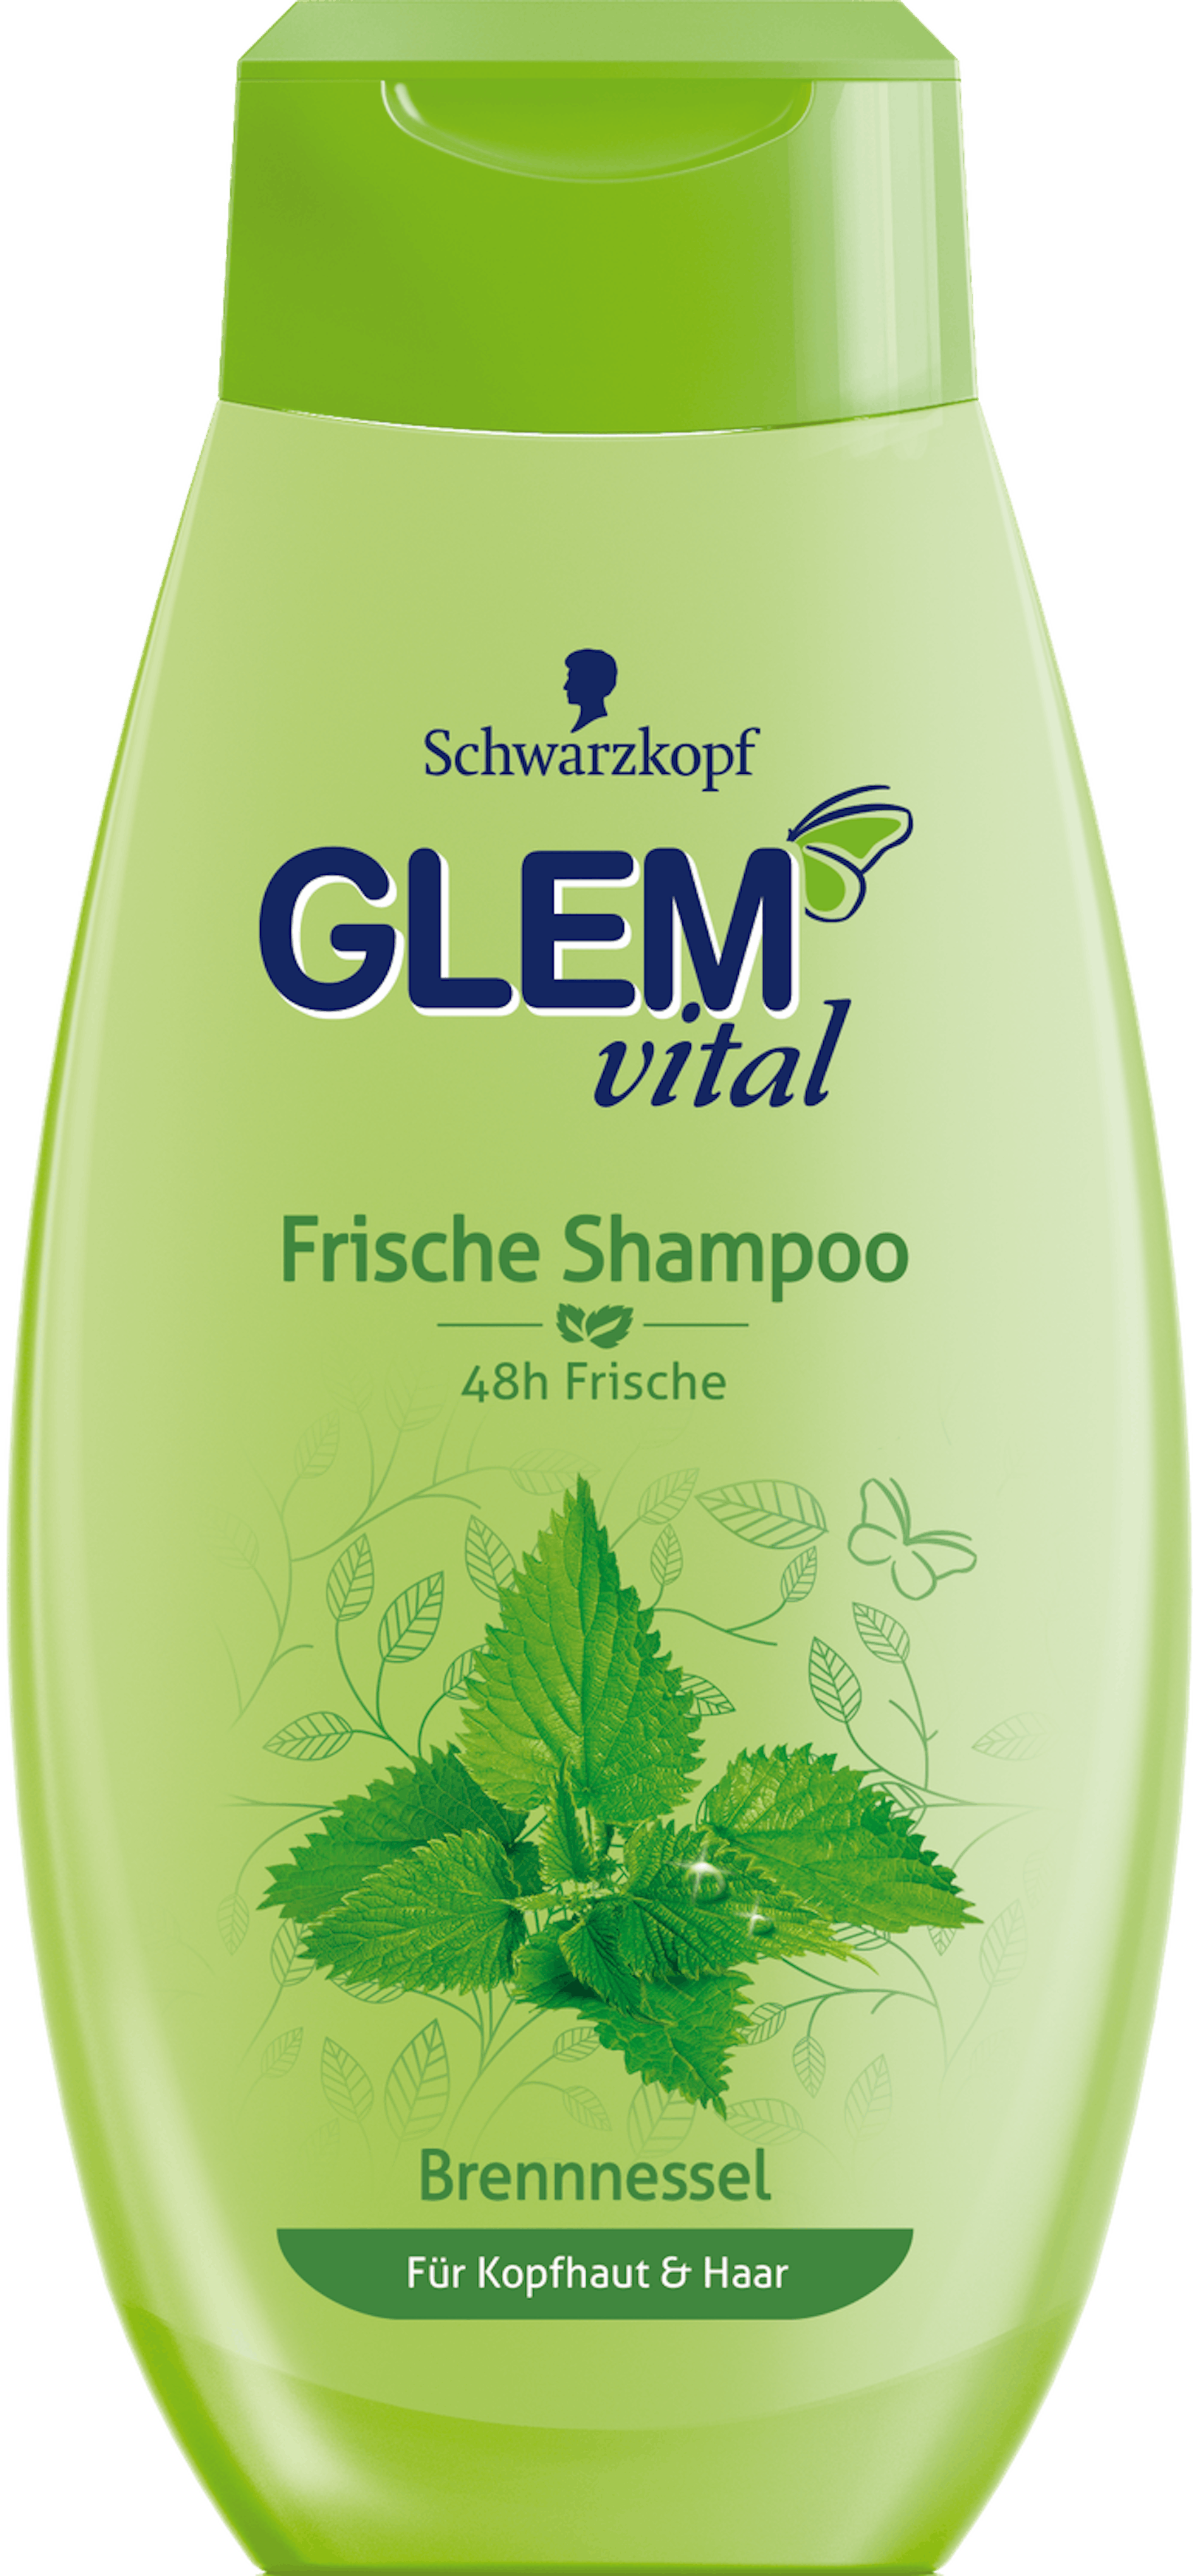 Glem vital Frische Shampoo